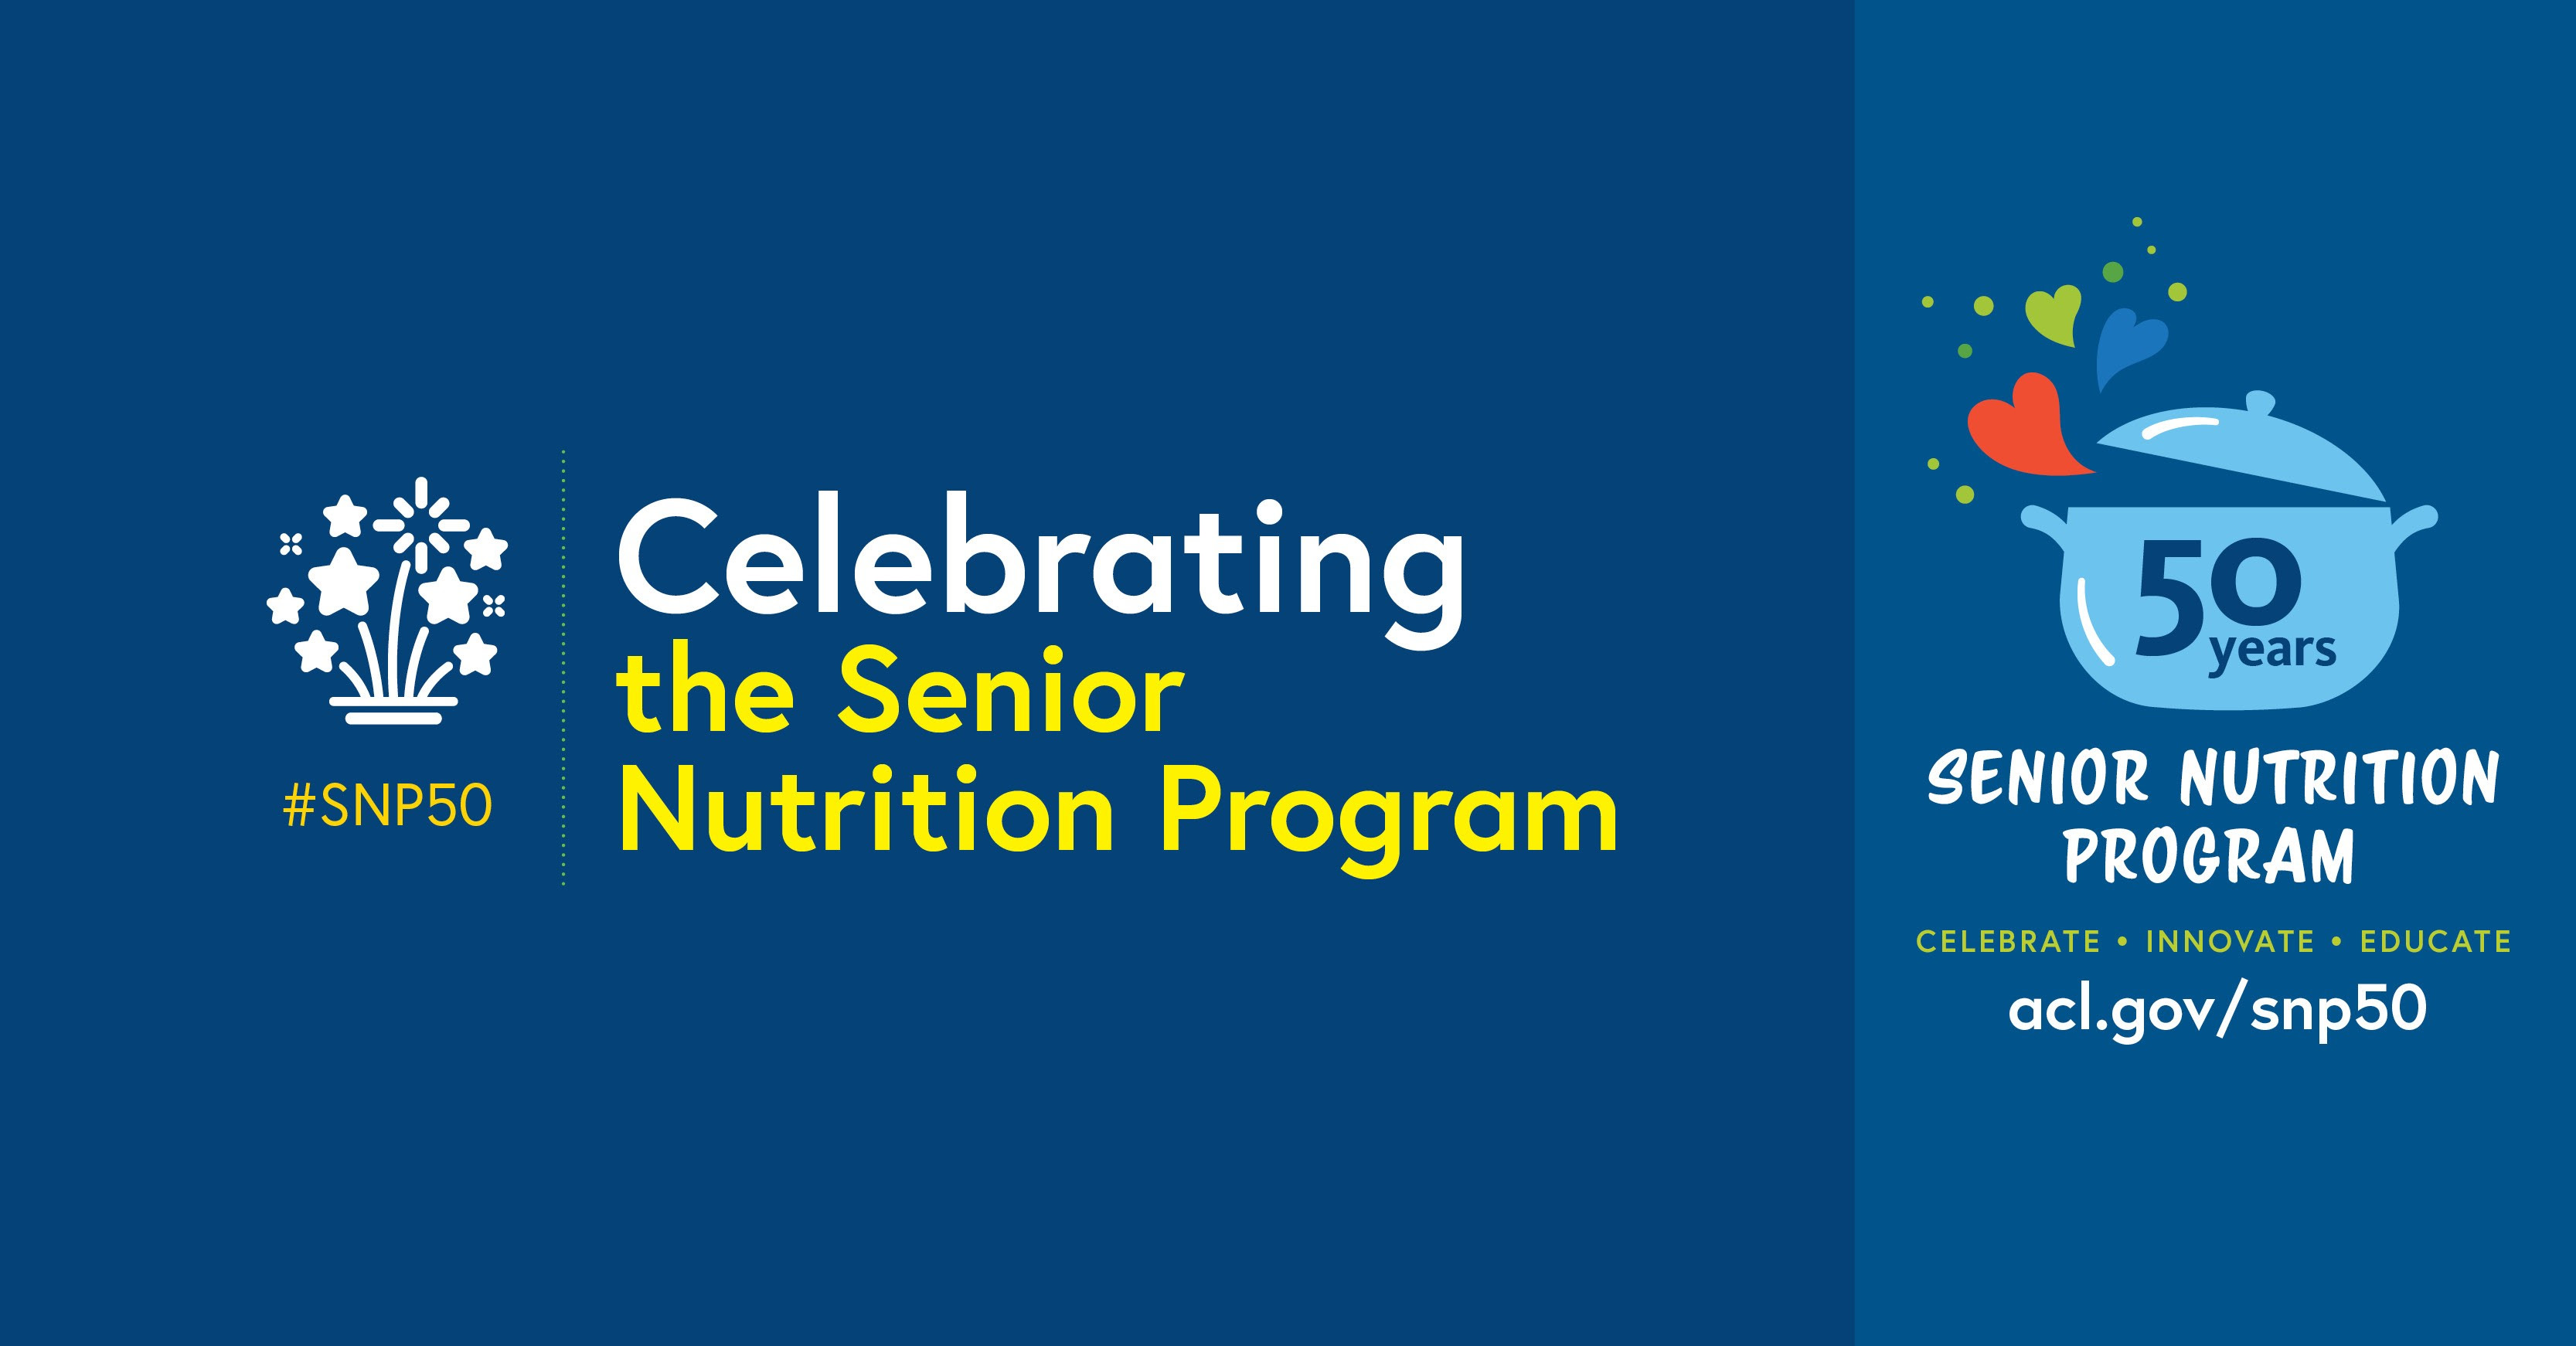 Social Graphic: Celebrating the Senior Nutrition Program. 50 years Senior Nutrition Program. Celebrate. Innovate. Educate. acl.gov/snp50 #SNP50